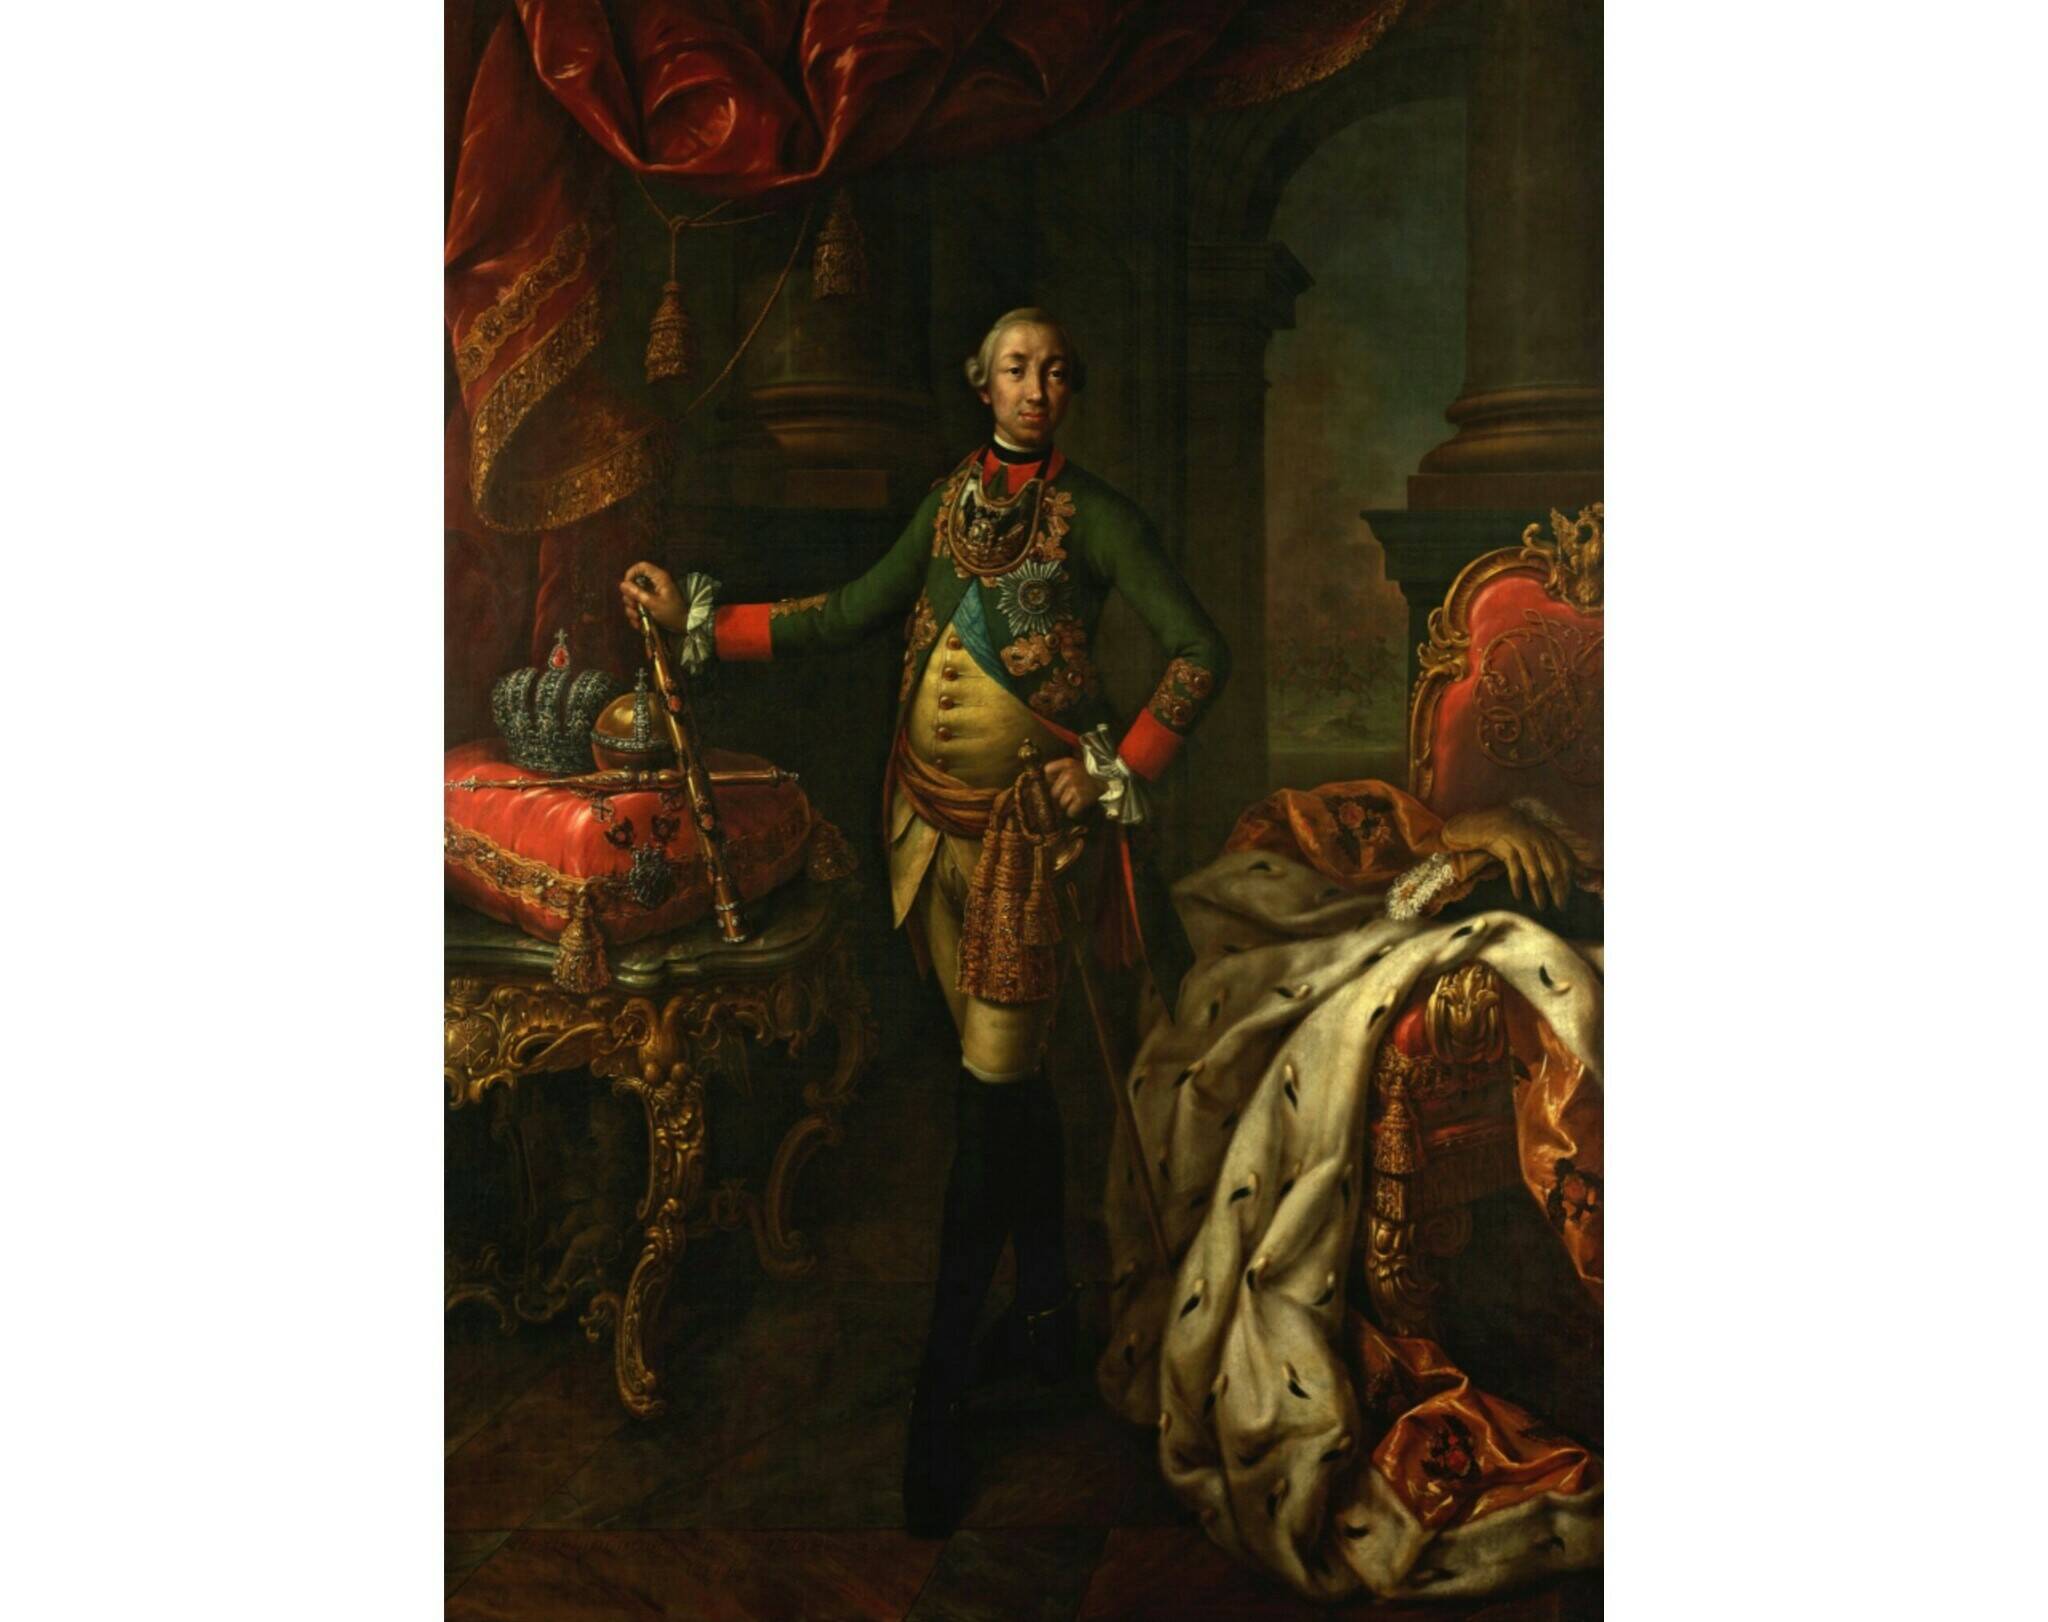 Вступление на престол петра 3. А.П. Антропов. Портрет Петра III. 1762. Алексея Петровича Антропова (1716-1795).